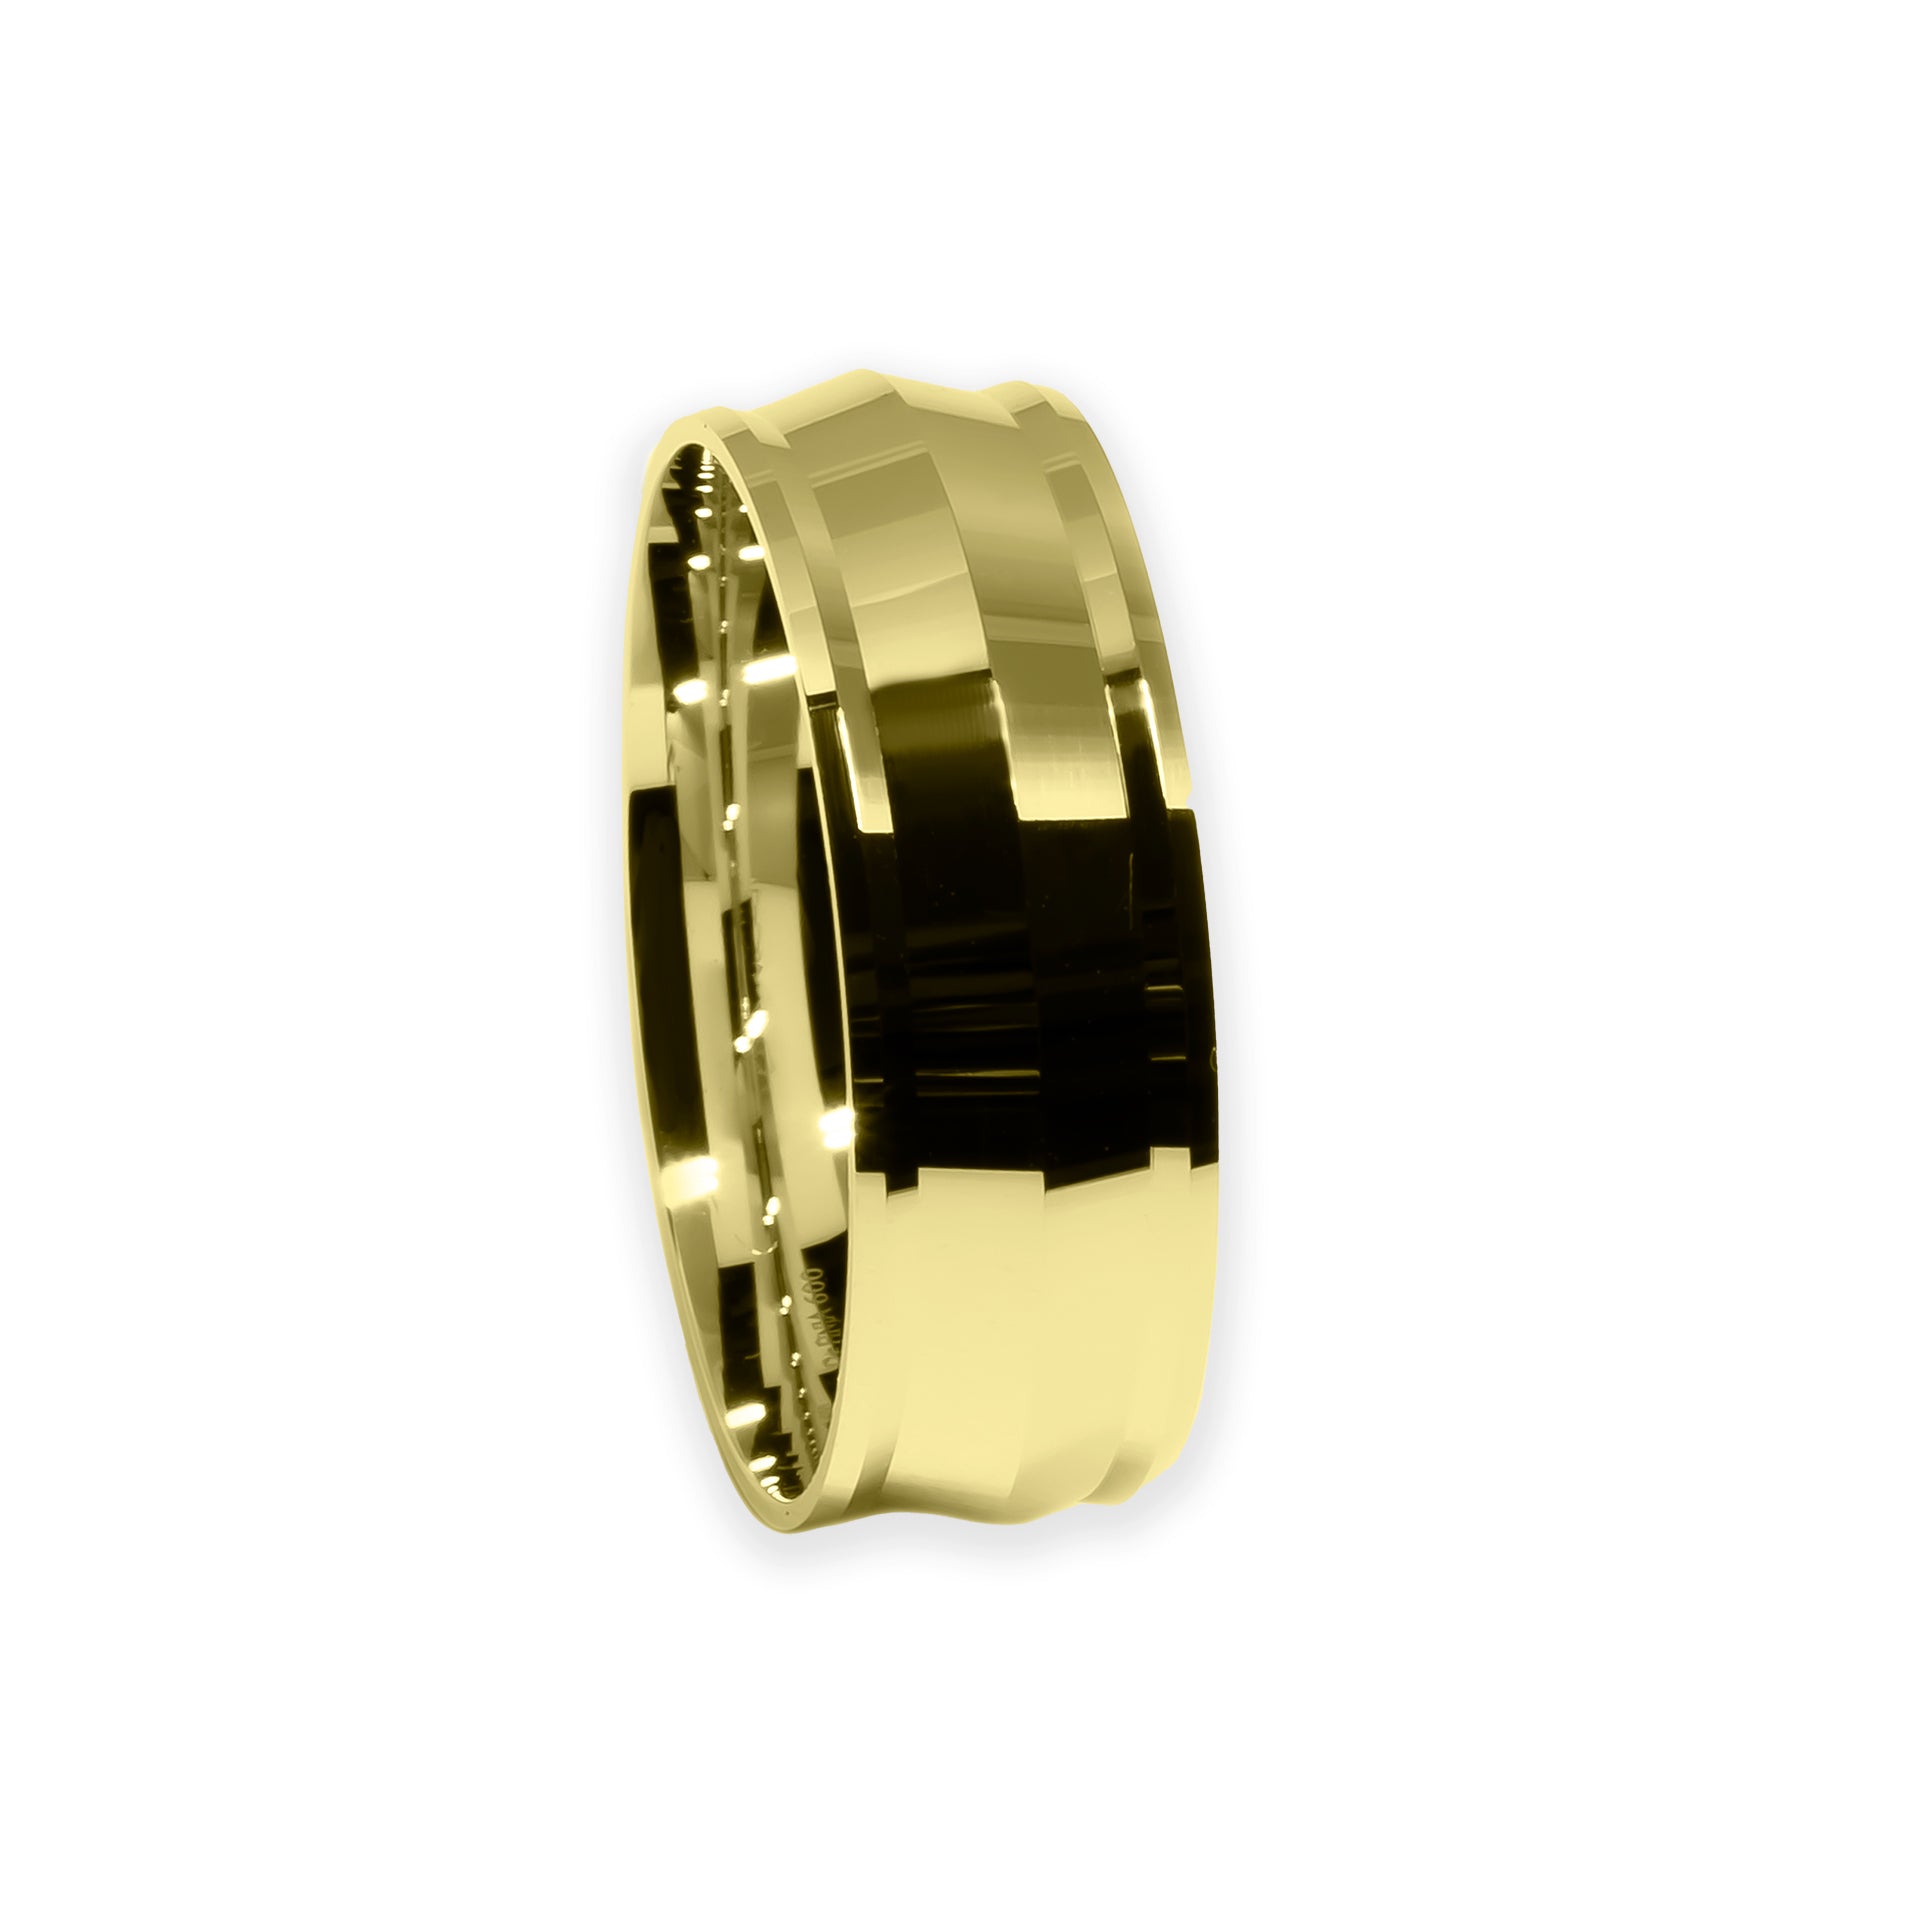 Ring CRUSH wheel-rim 6mm yellow gold 18k 750